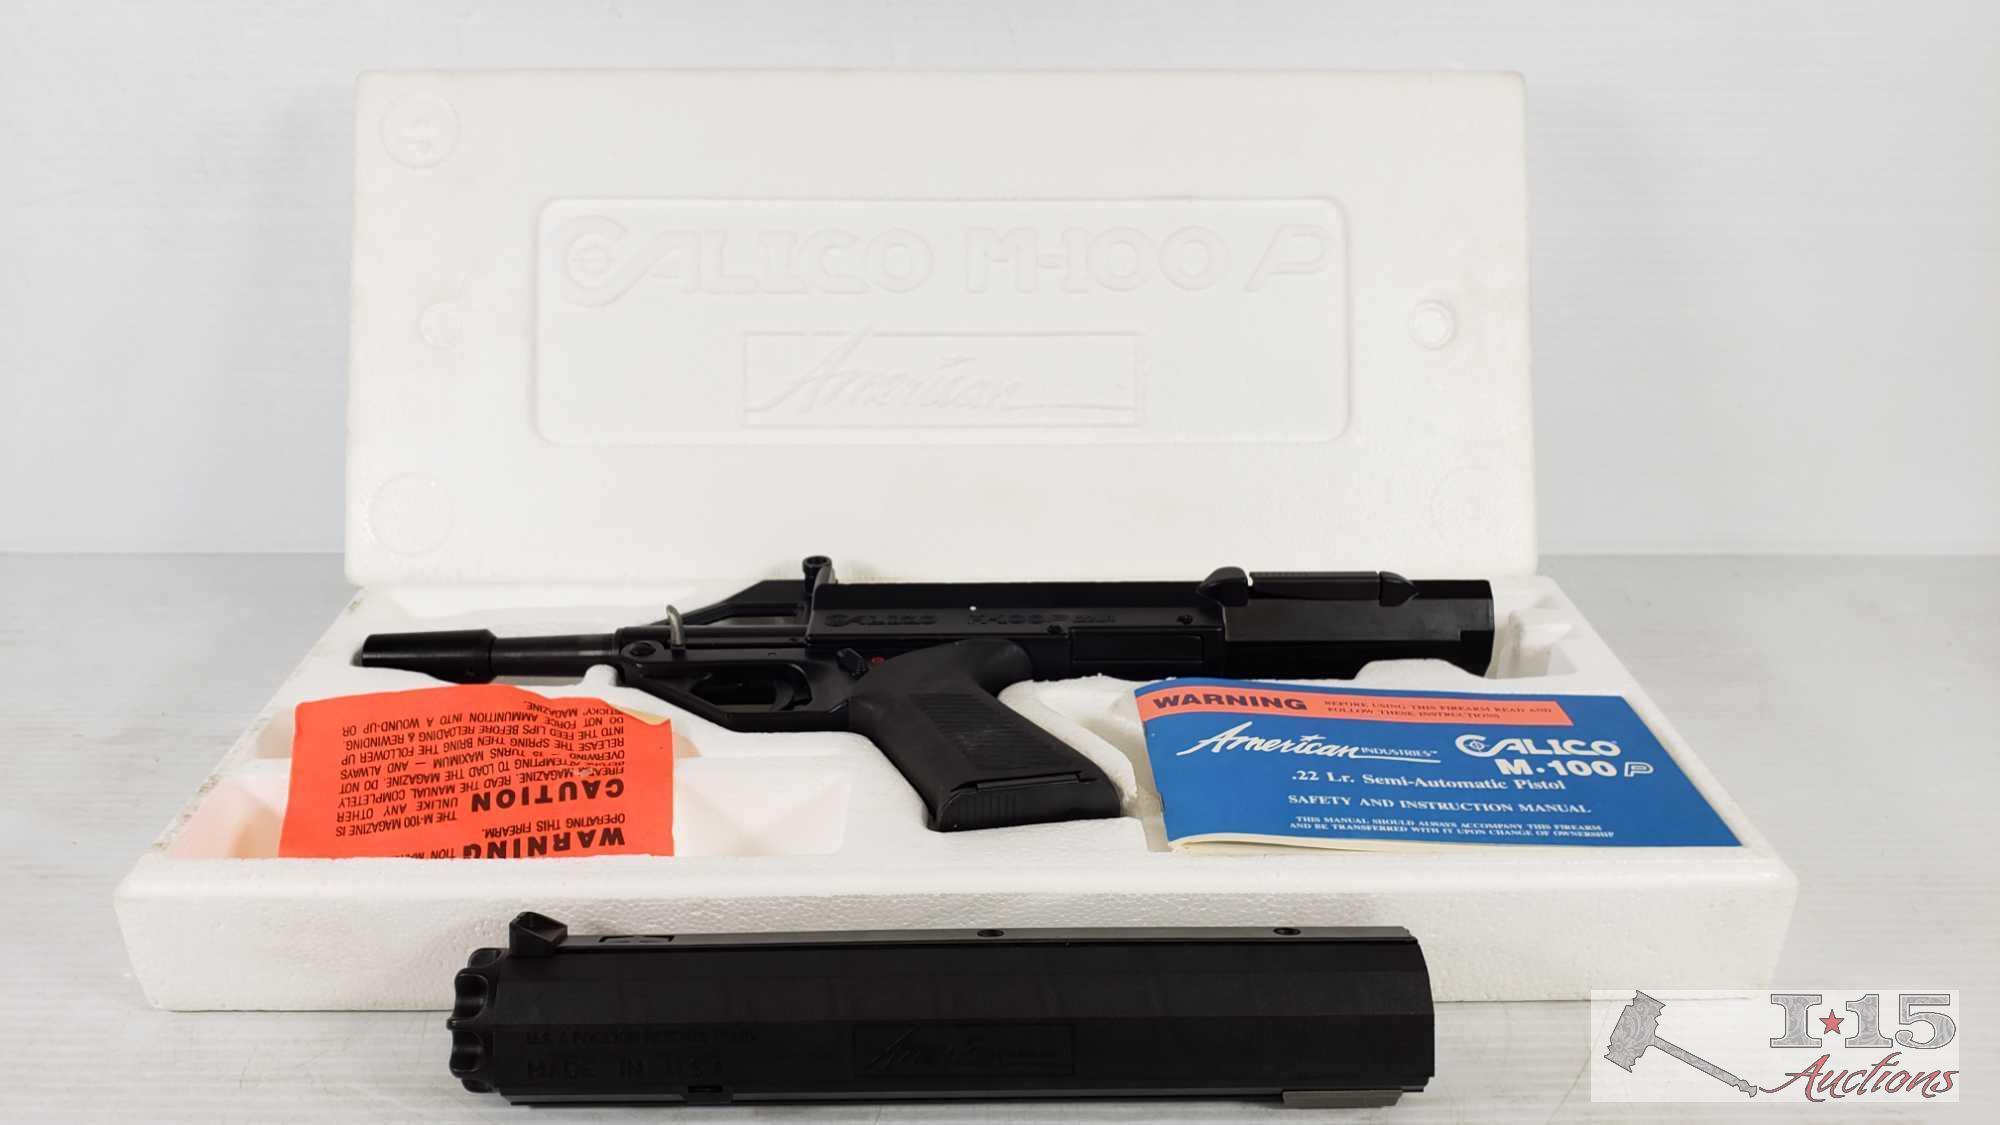 Calico M-100P .22lr Semi-Auto Pistol with Original Box and 100 Round Magazine